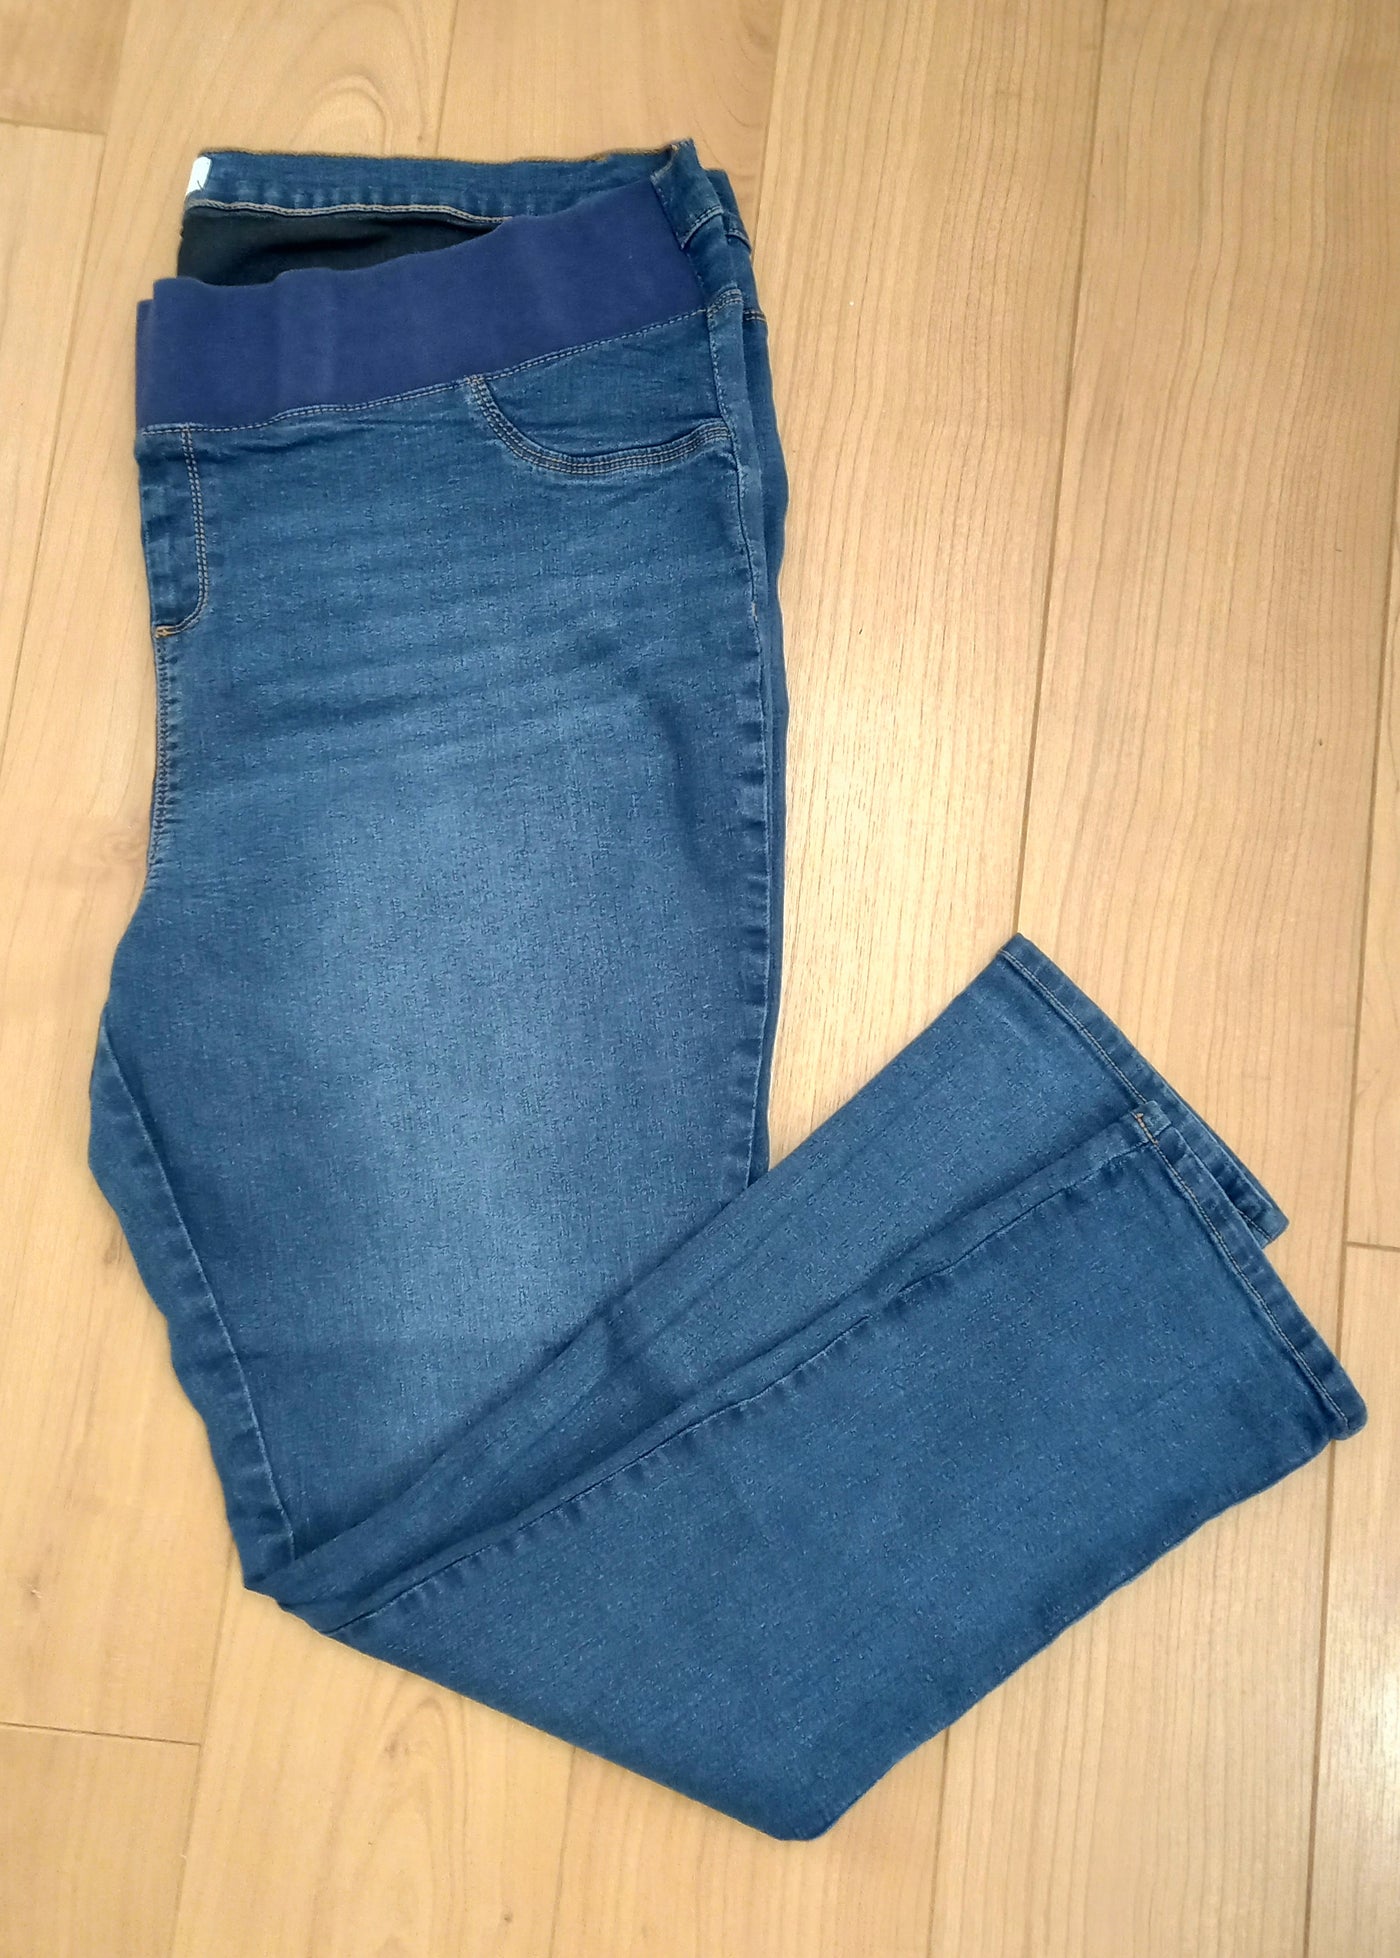 Dorothy Perkins Maternity Blue Underbump Jeans - Size 22